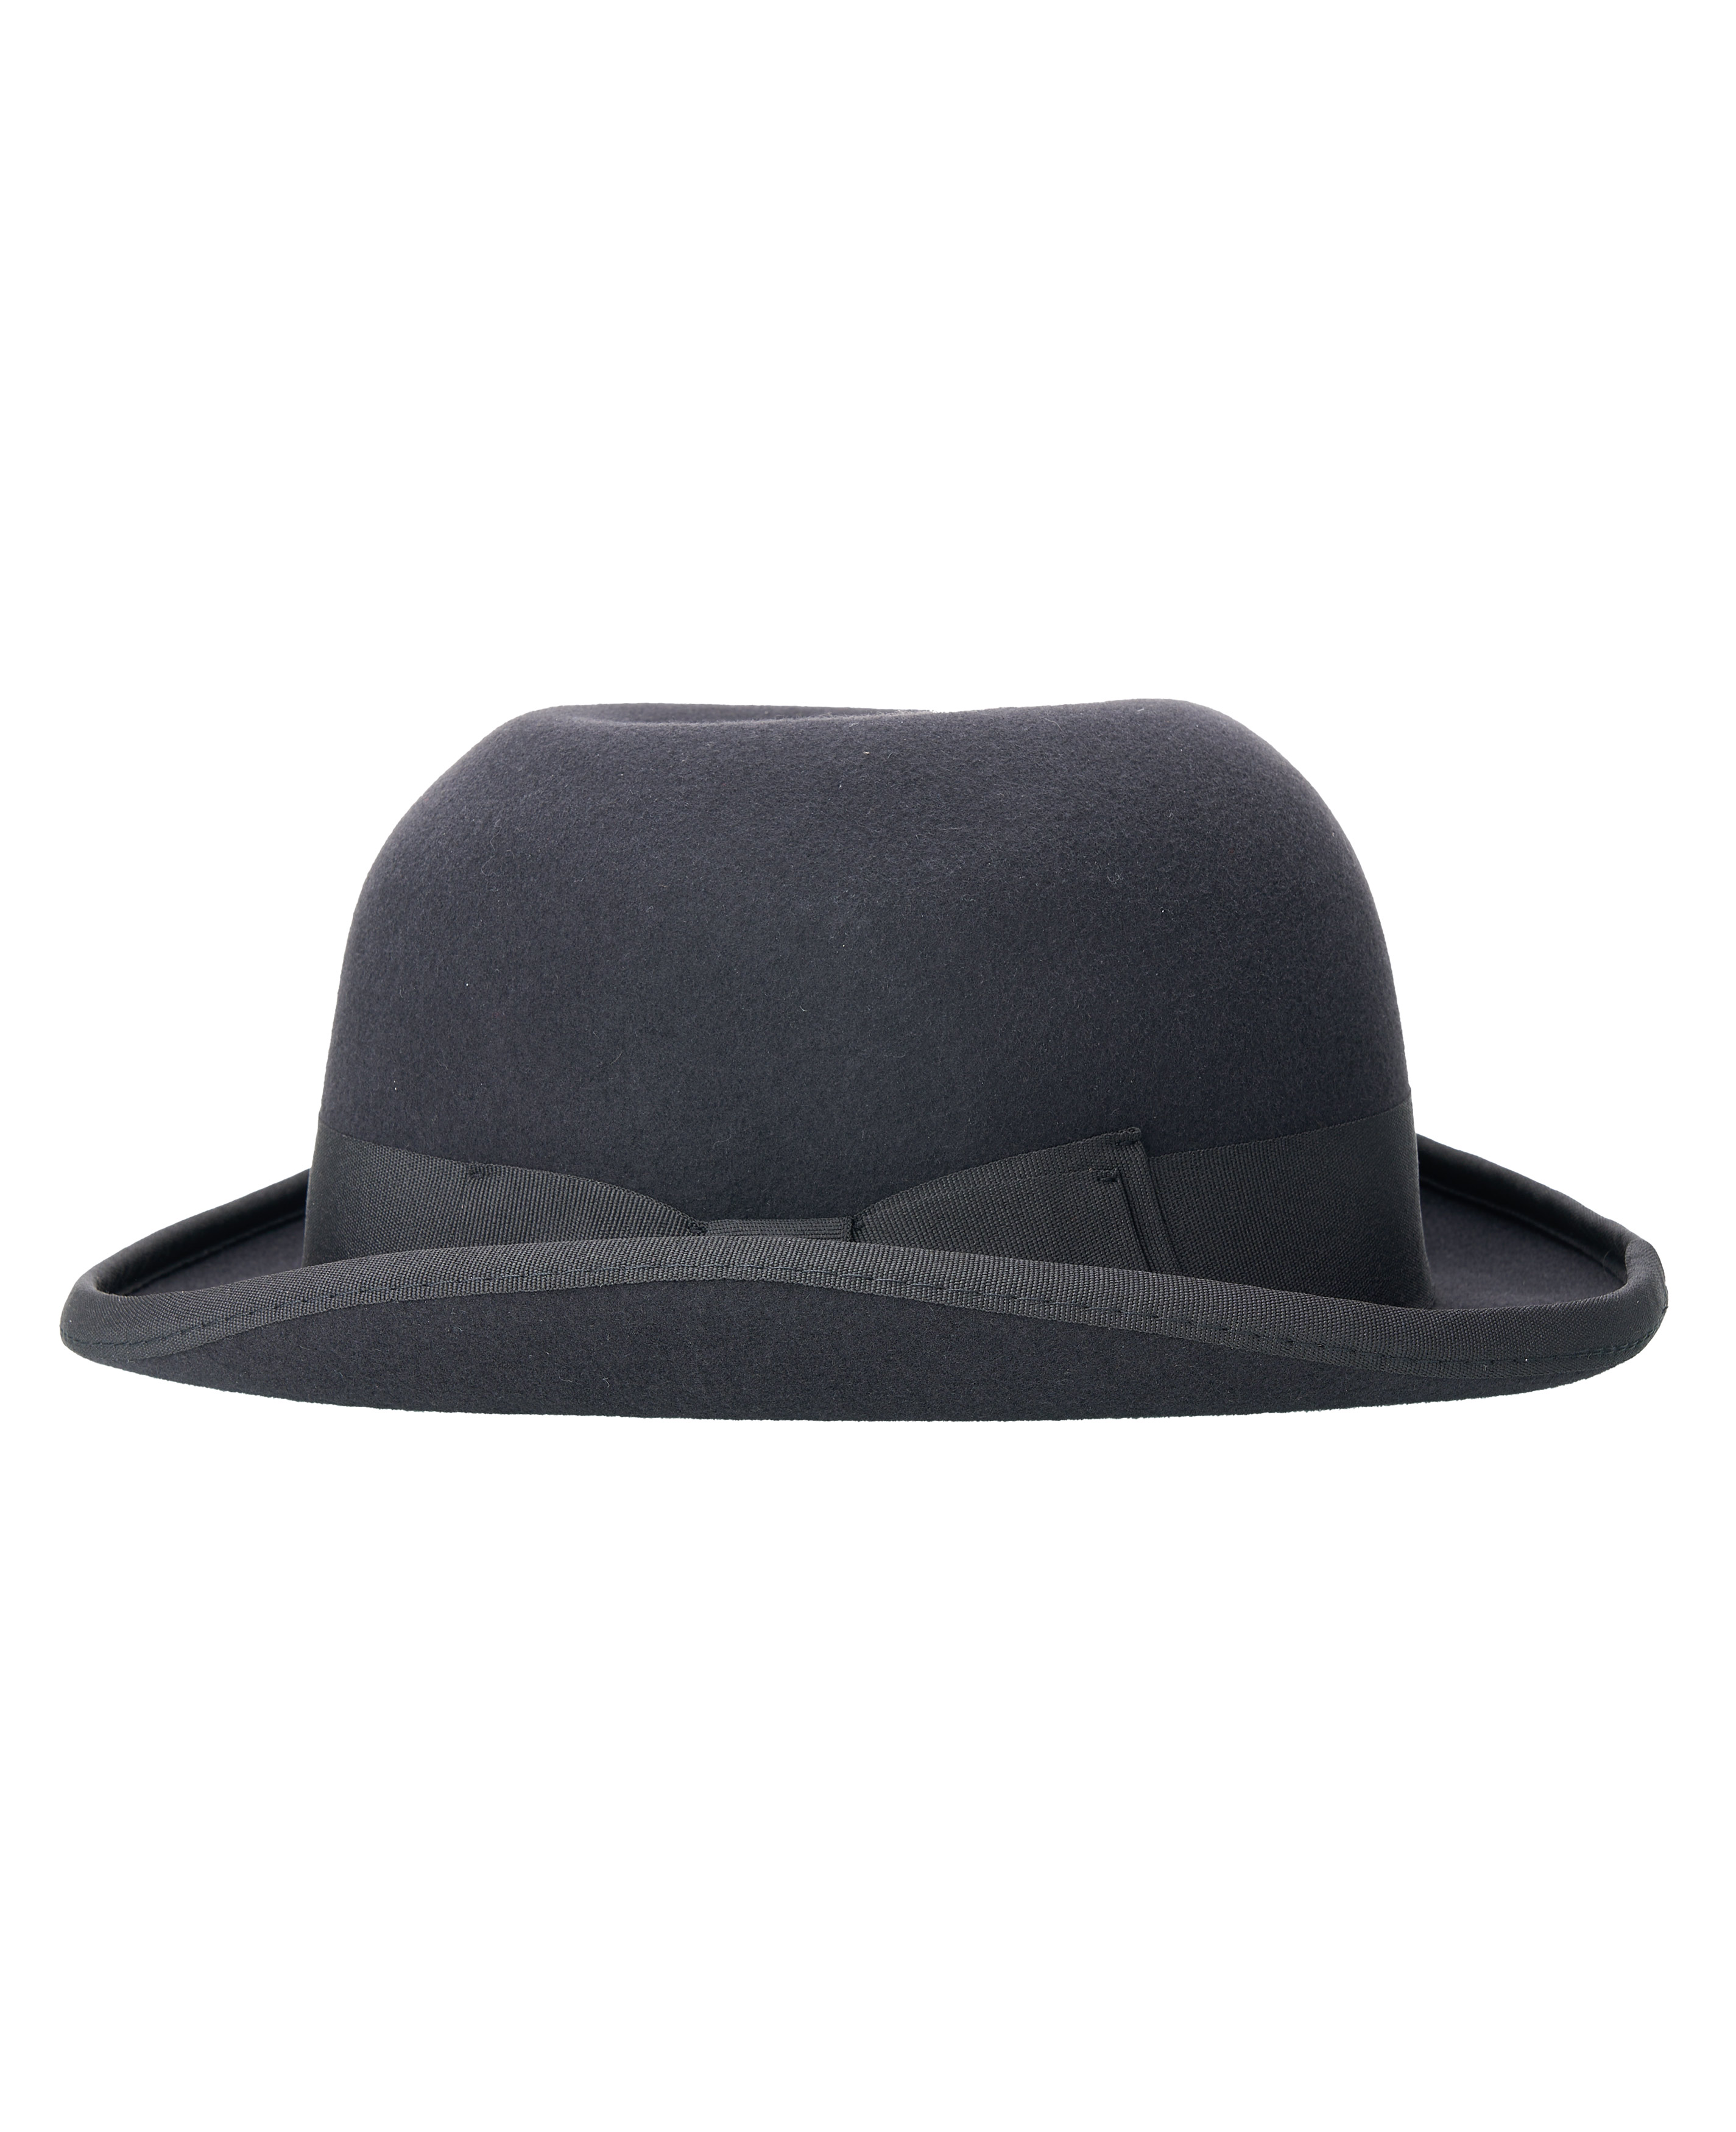 1921 Bowler Hat grey